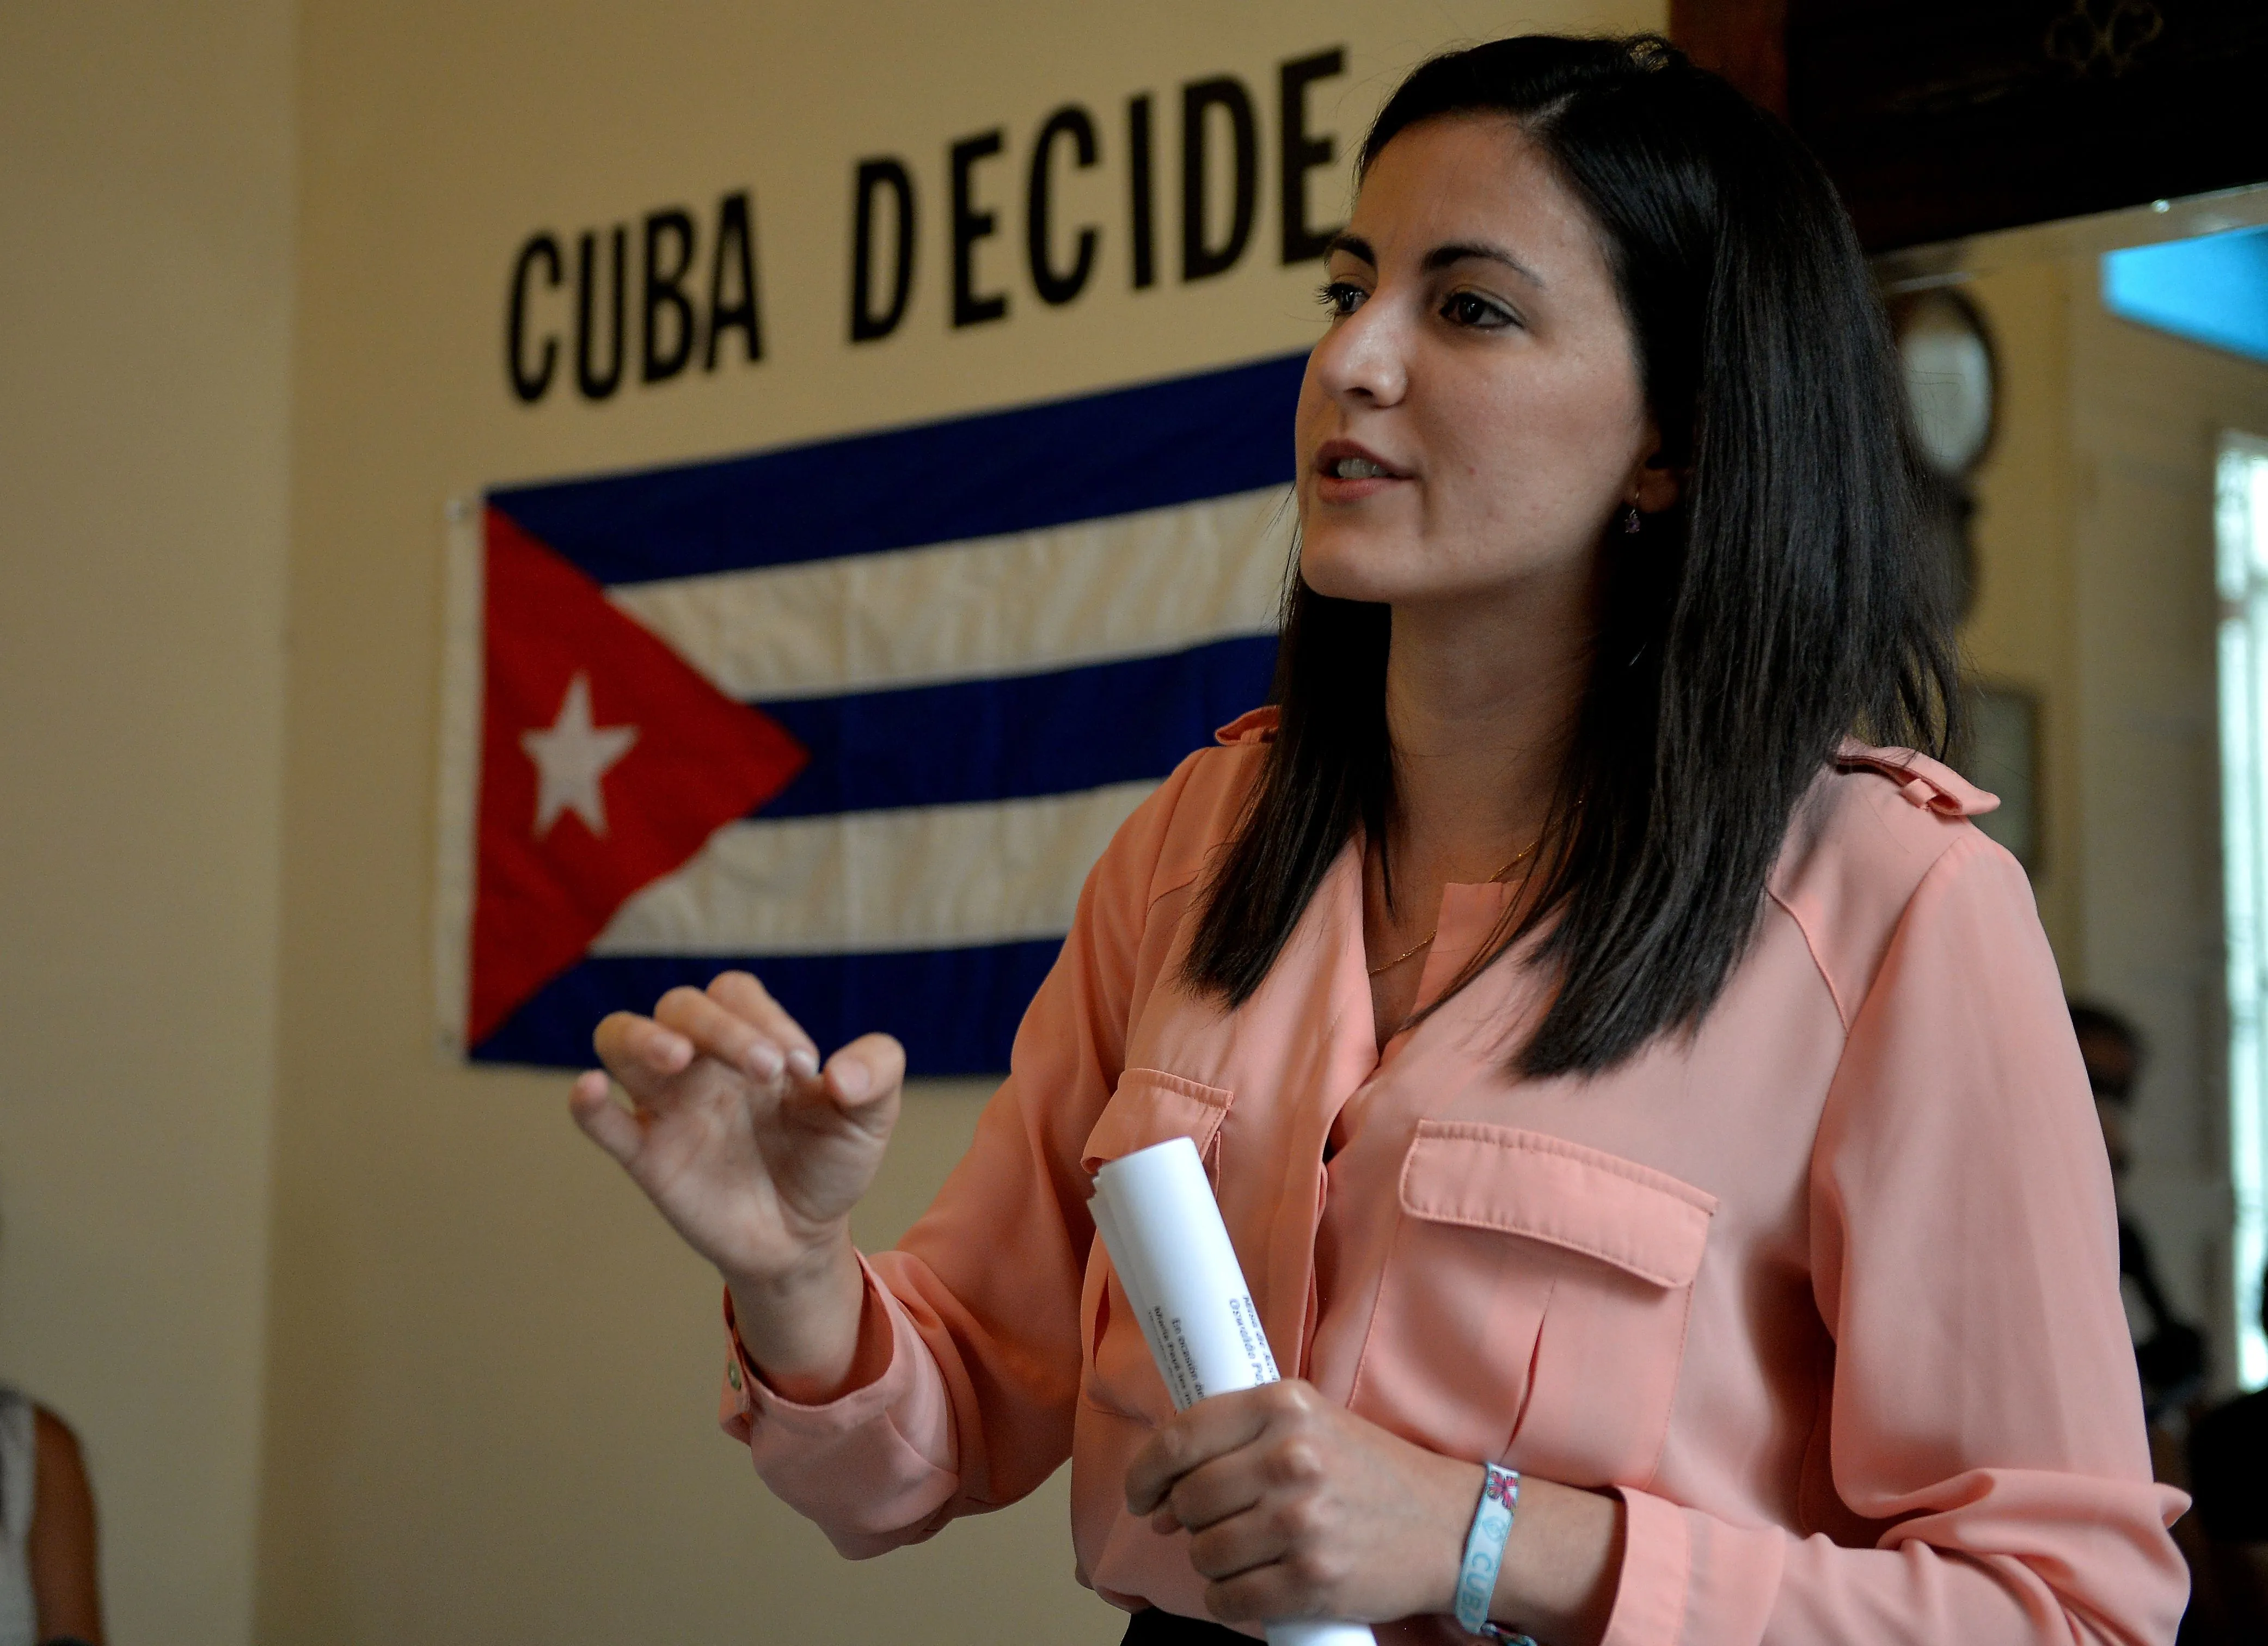 Rosa María Payá coordinates the pro-Cuba democracy platform Cuba Decide. She is the daughter of the revered late Catholic Cuban dissident Oswaldo Payá.?w=200&h=150